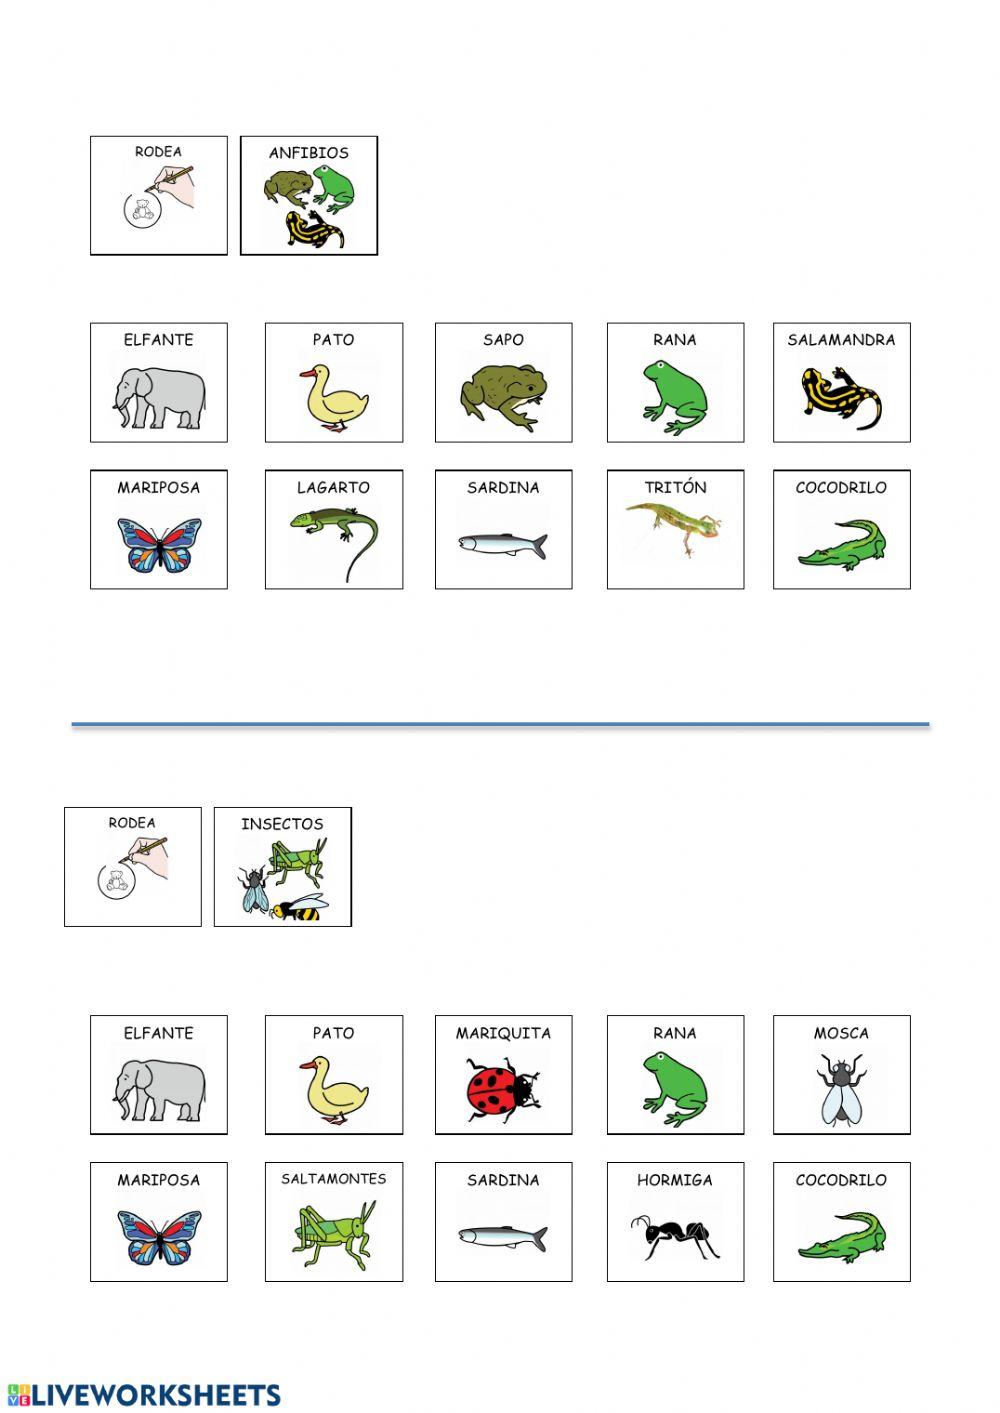 Tipos de animales (ficha adaptada de ARASAAC)